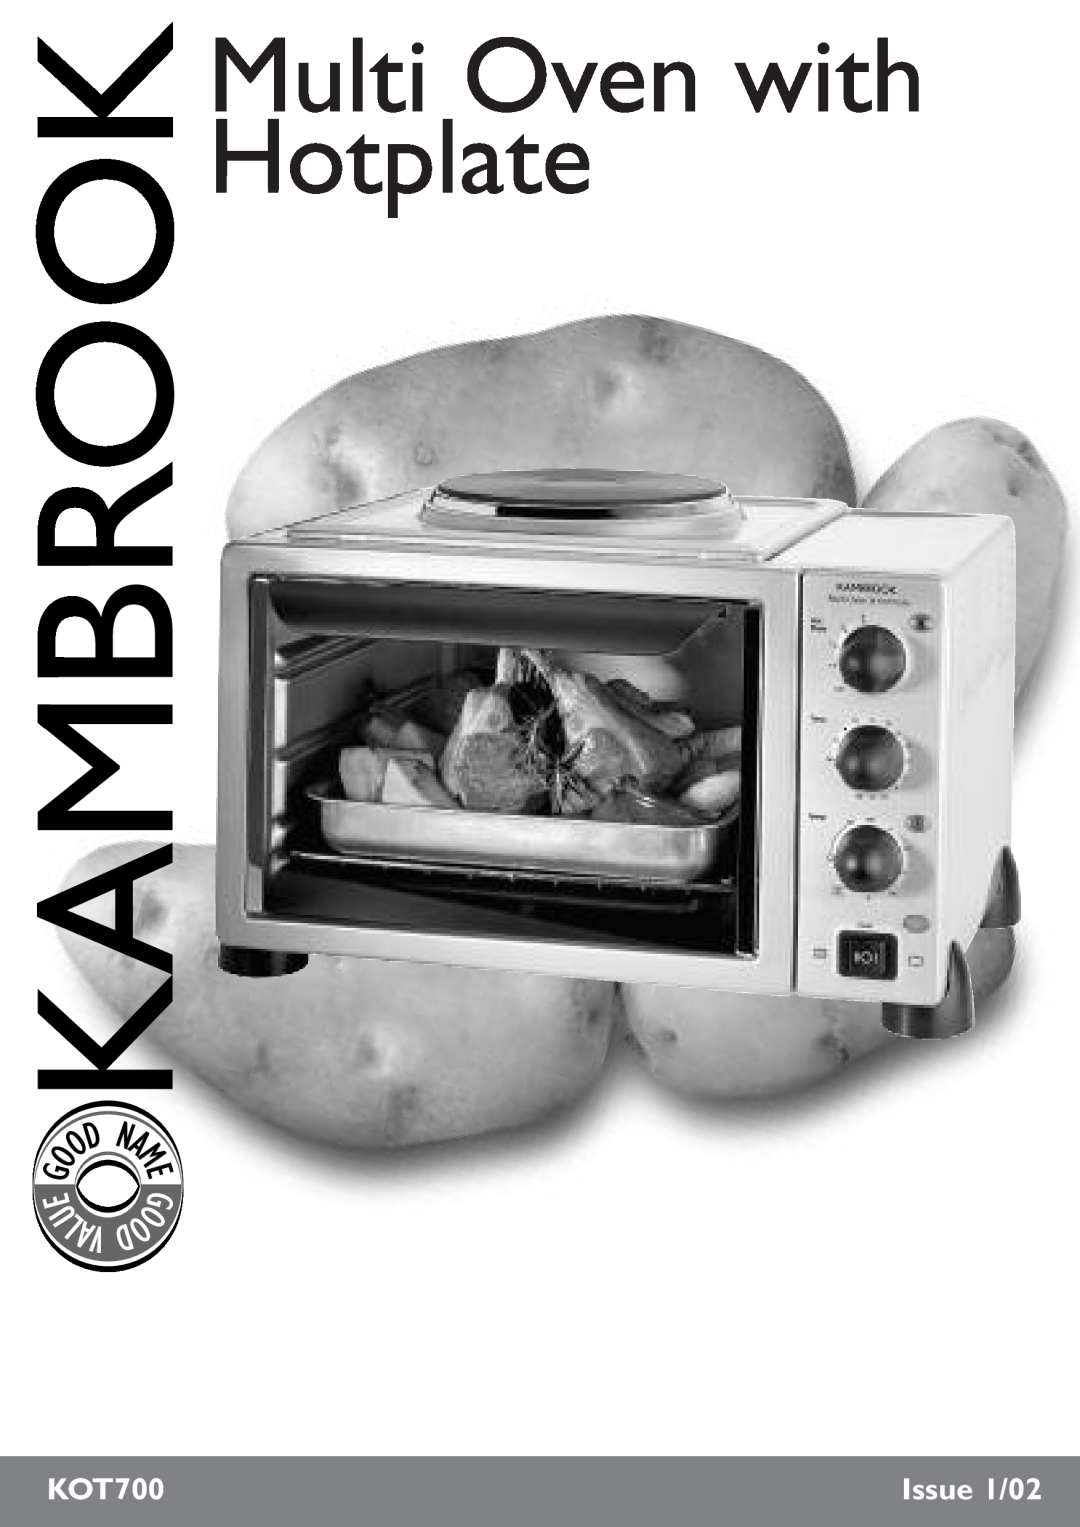 Kambrook KOT700 manual U Lav, Multi Oven with Hotplate, Issue 1/02 